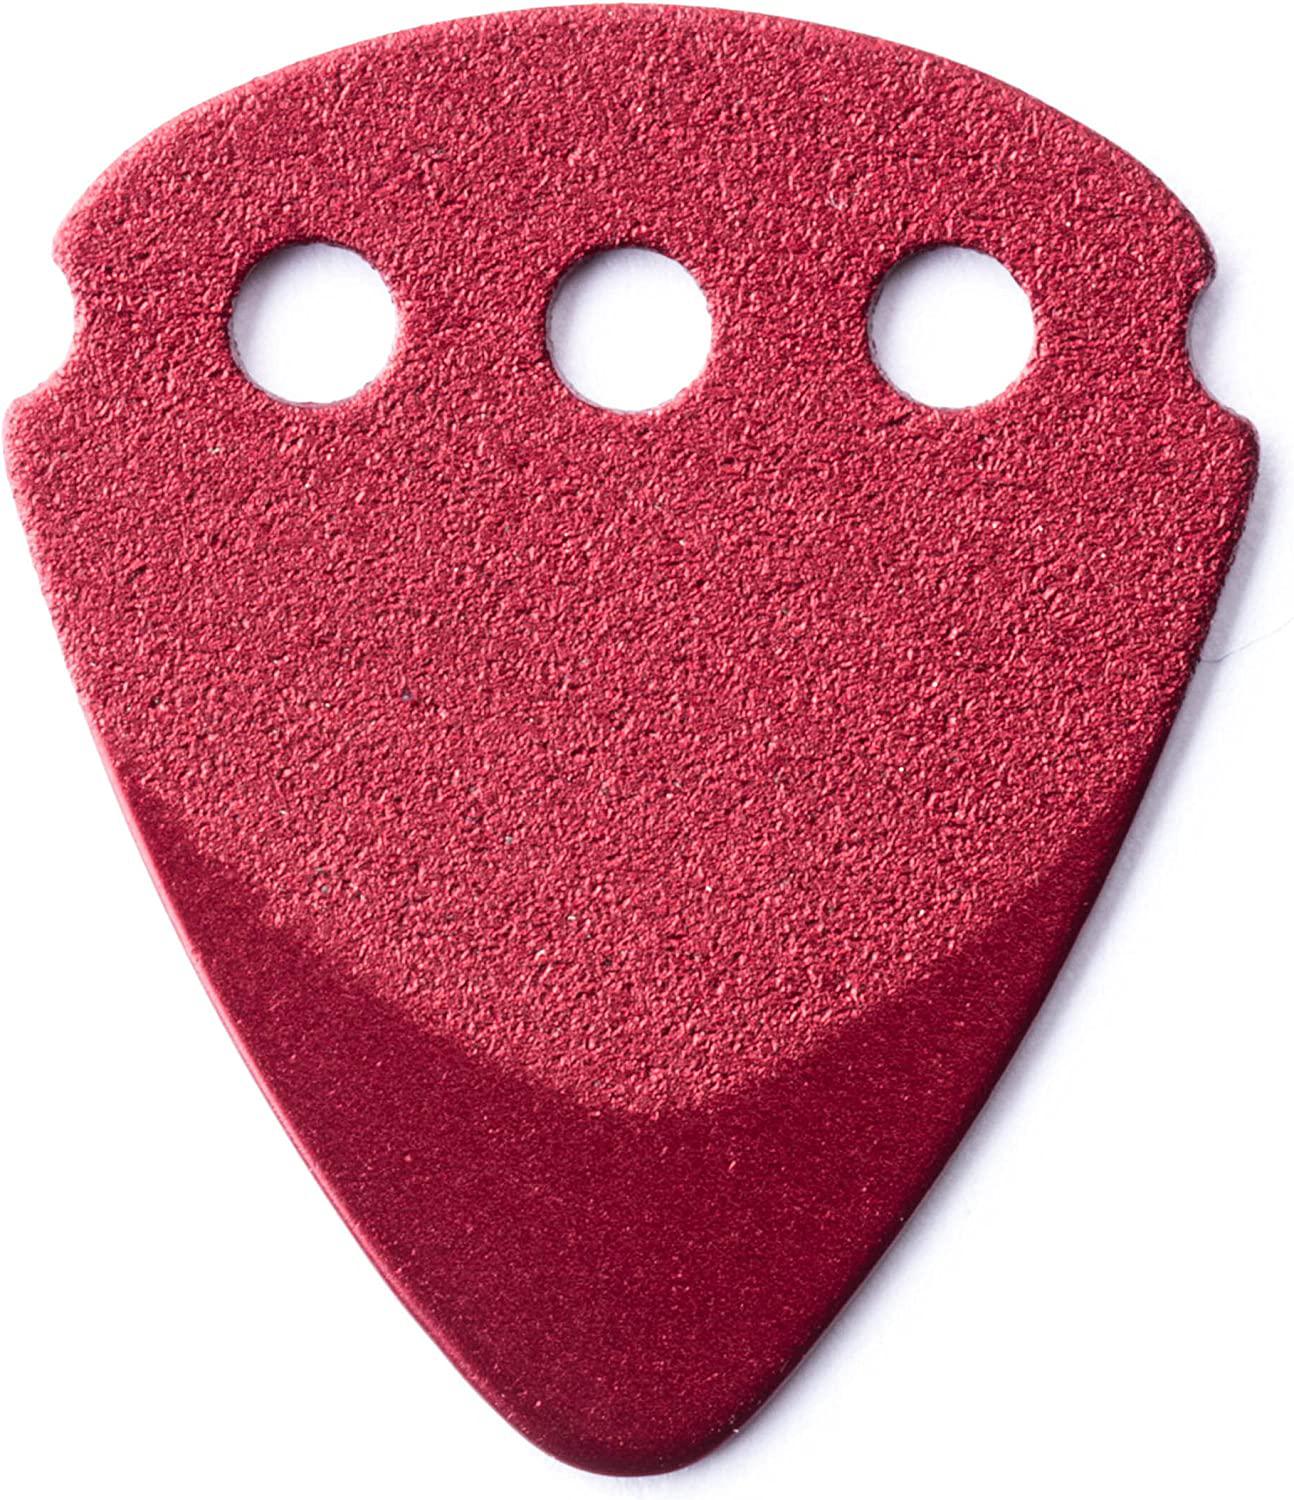 Dunlop - 12 Plumillas Teckpick, Color: Roja Mod.467R RED_13